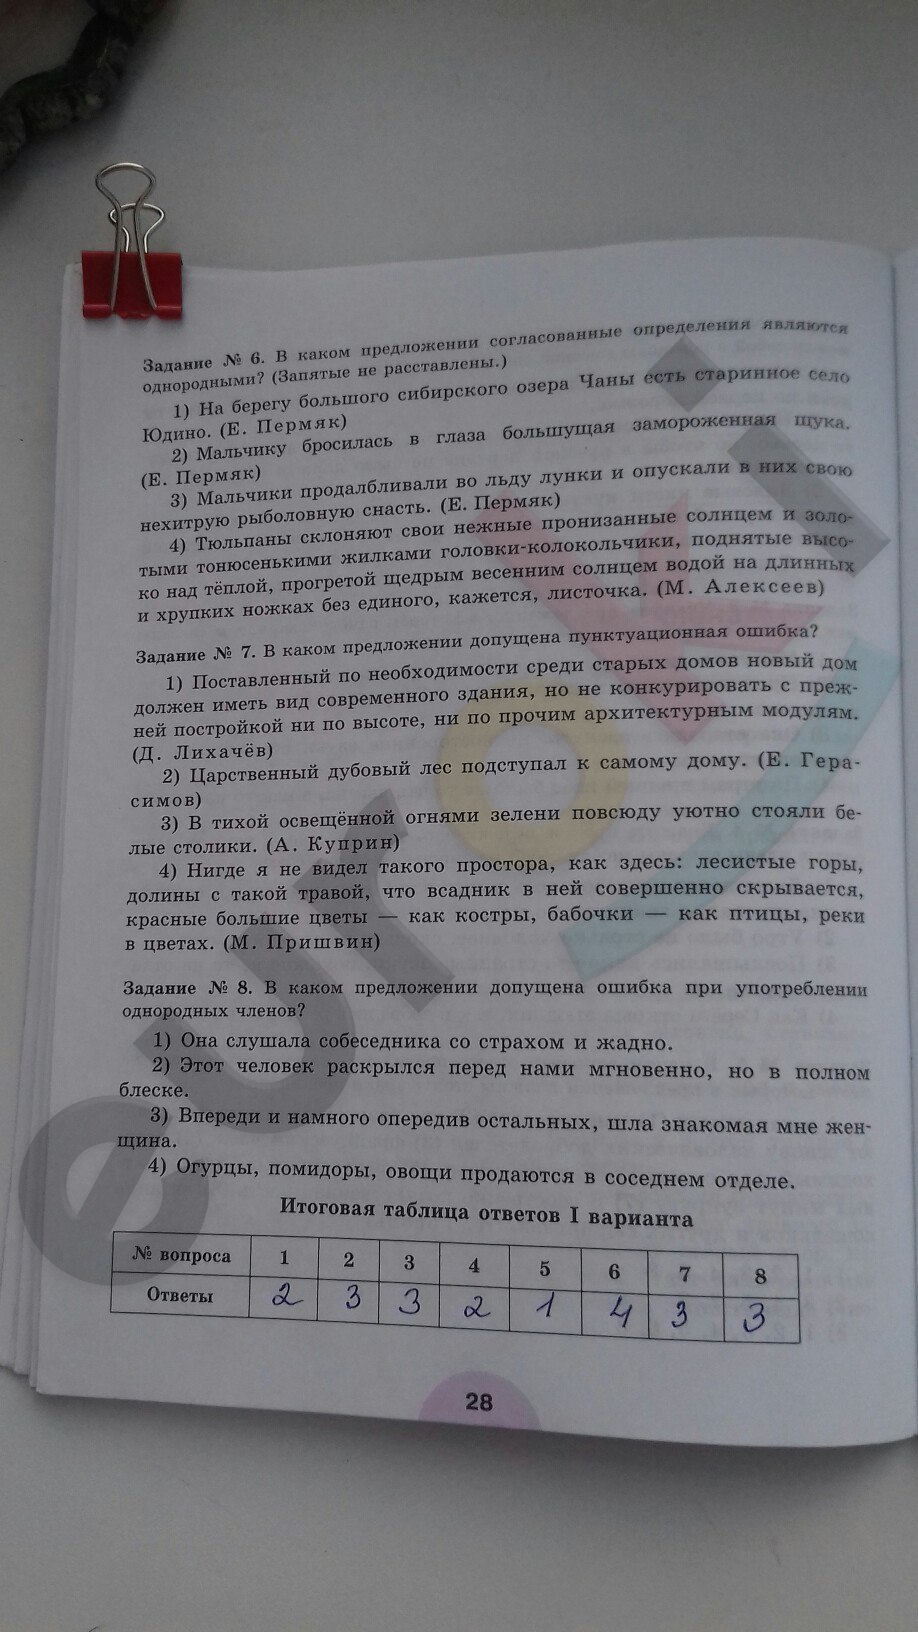 гдз 8 класс рабочая тетрадь часть 2 страница 28 русский язык Рыбченкова, Александрова